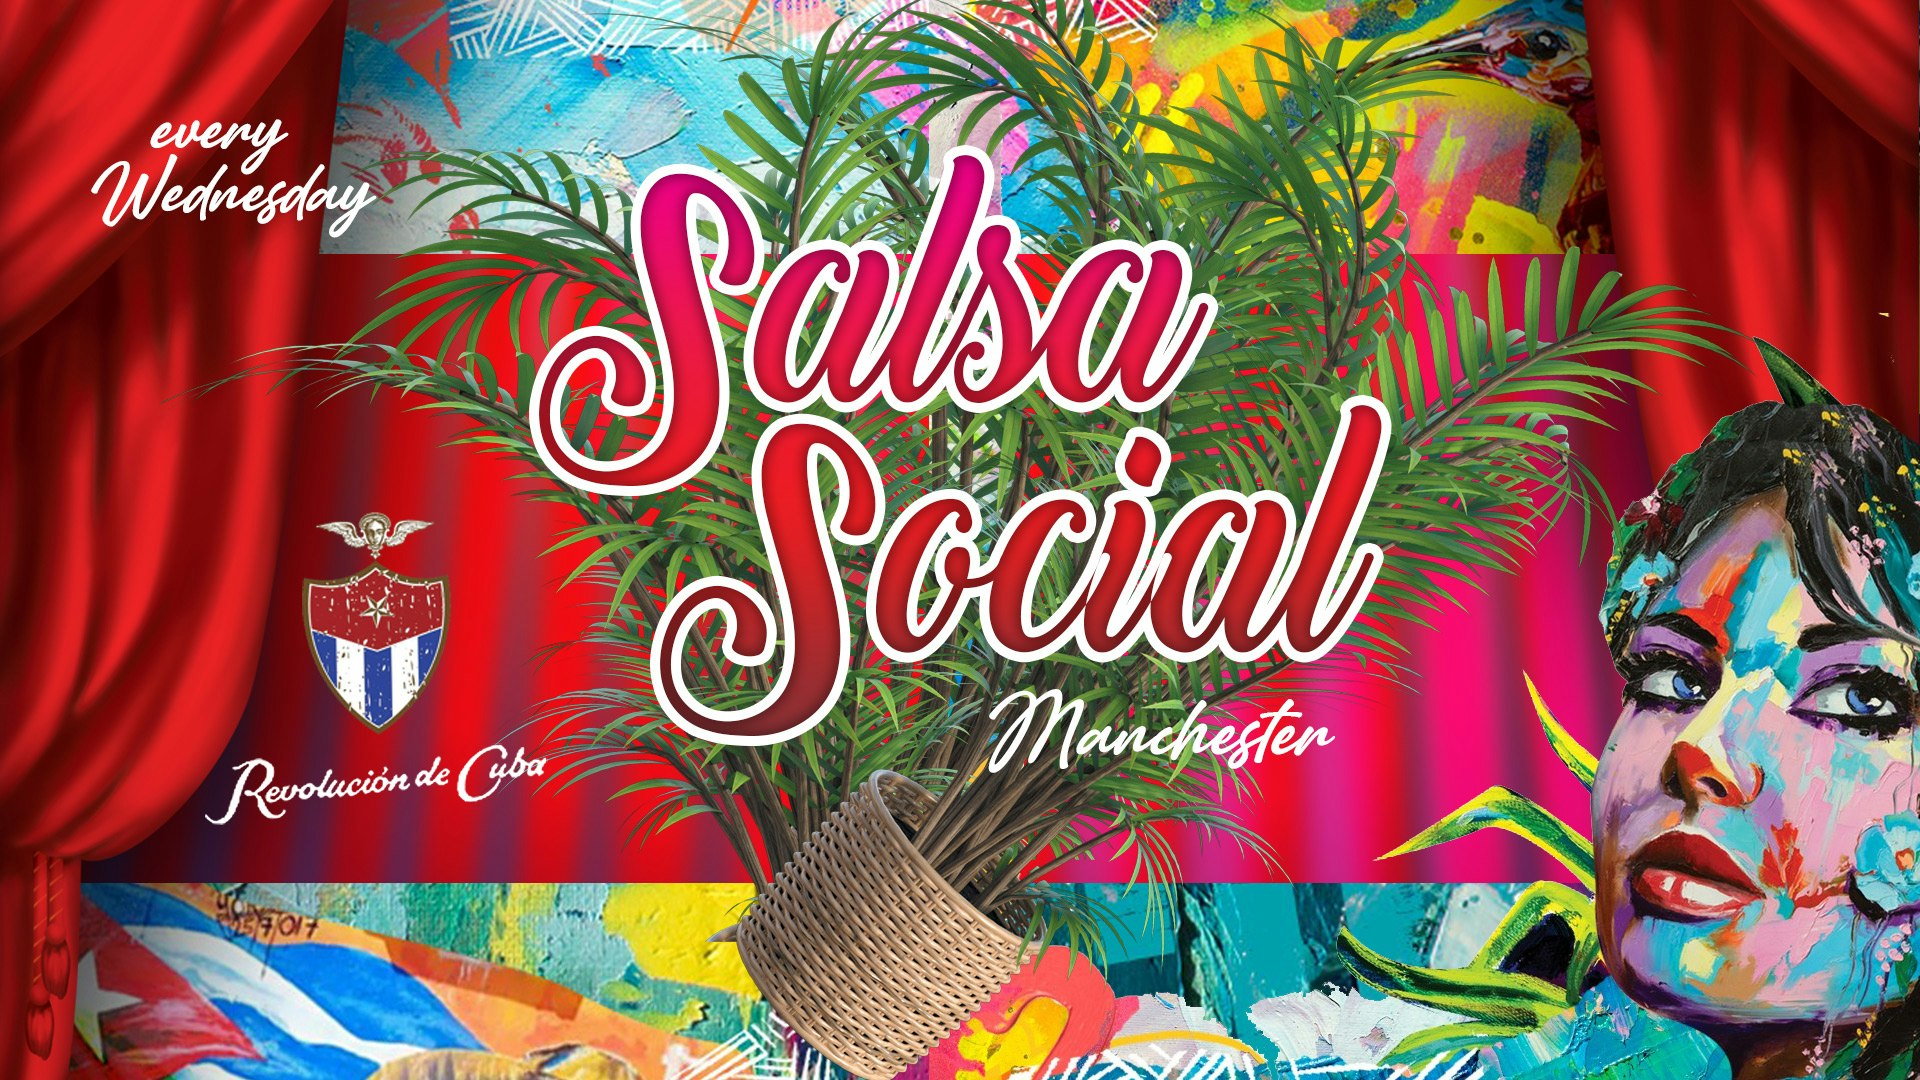 Salsa Social Manchester – Every Wednesday | Revolucion de Cuba